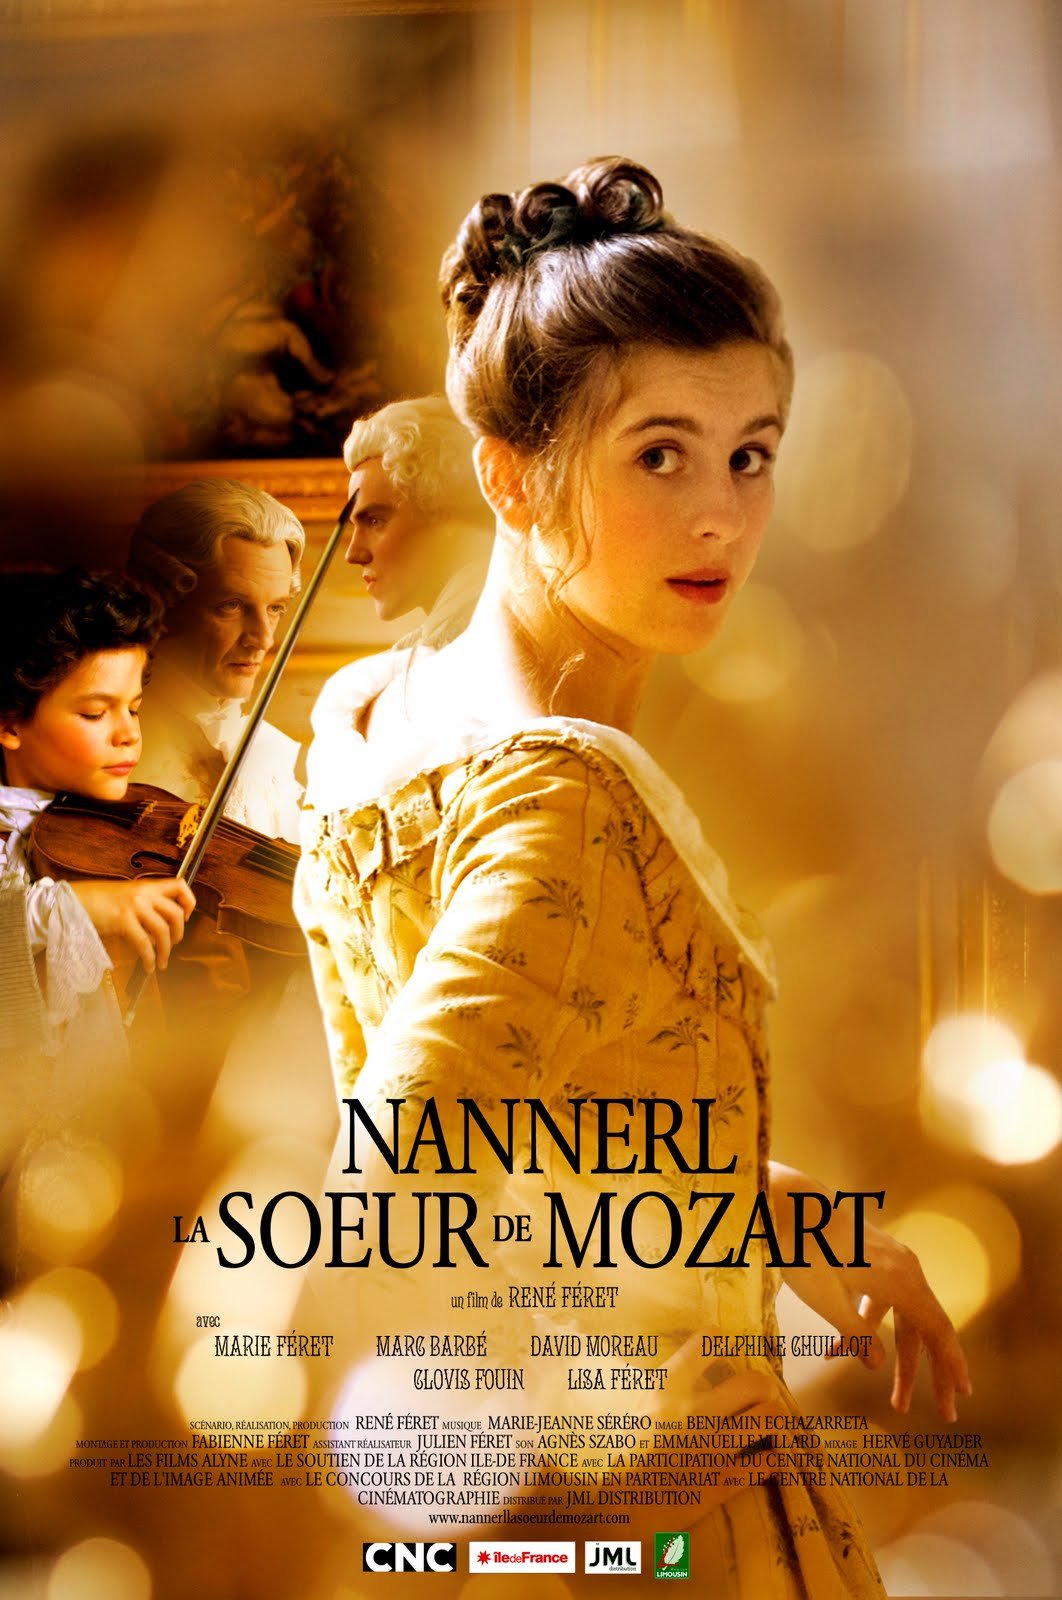 Poster of the movie Nannerl, la soeur de Mozart